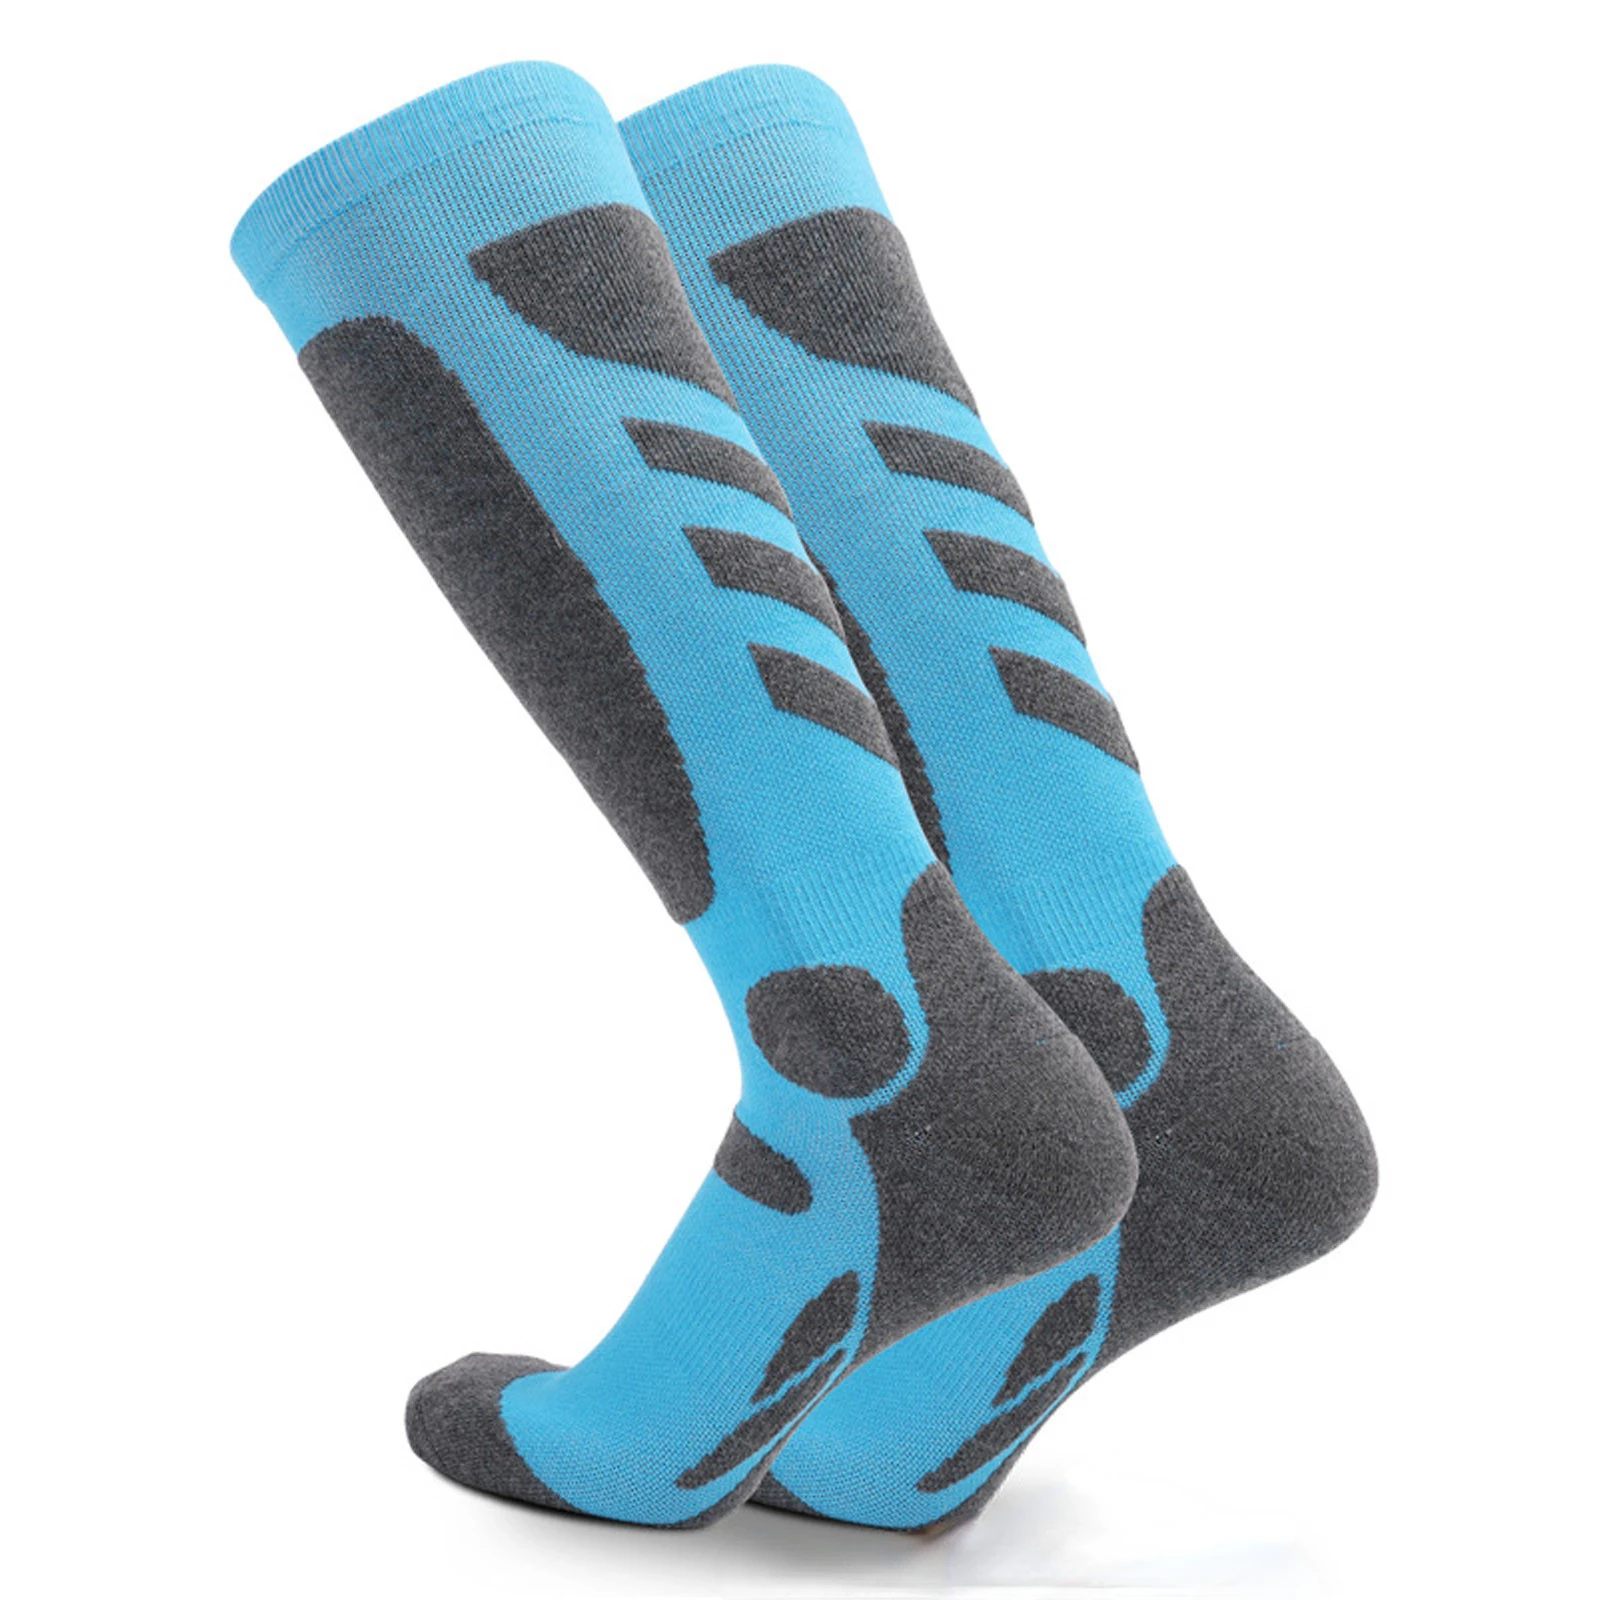 

Winter Warm Thermal Ski Socks Thick Cotton Sports Snowboard Cycling Skiing Soccer Socks Leg Warmers Sock Dropshipping